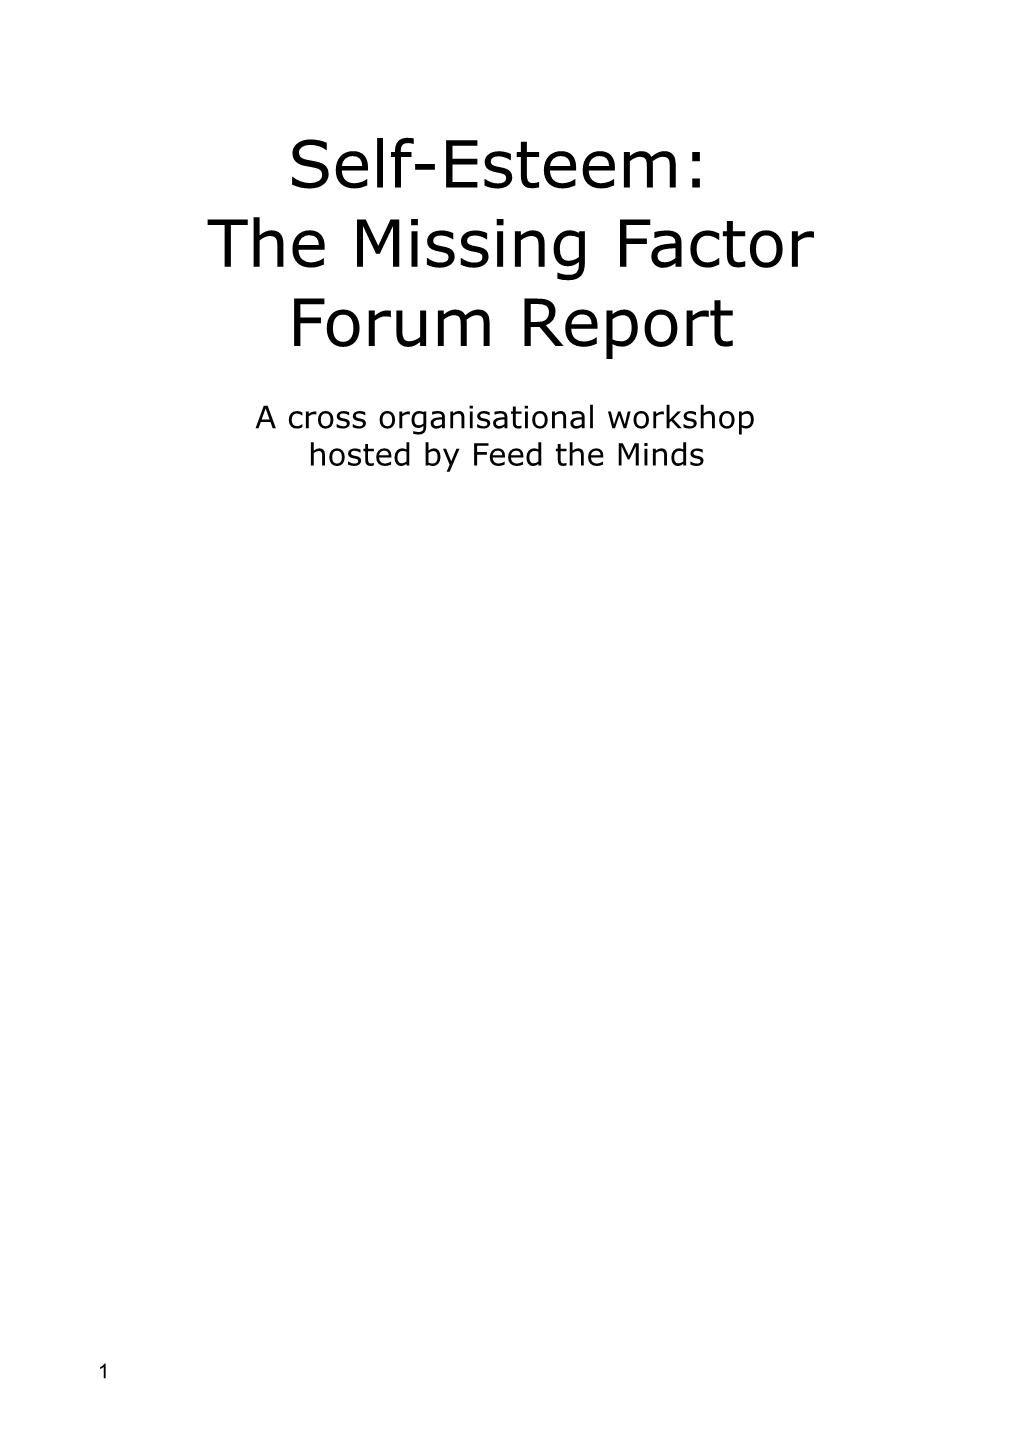 The Missing Factor Forum Report